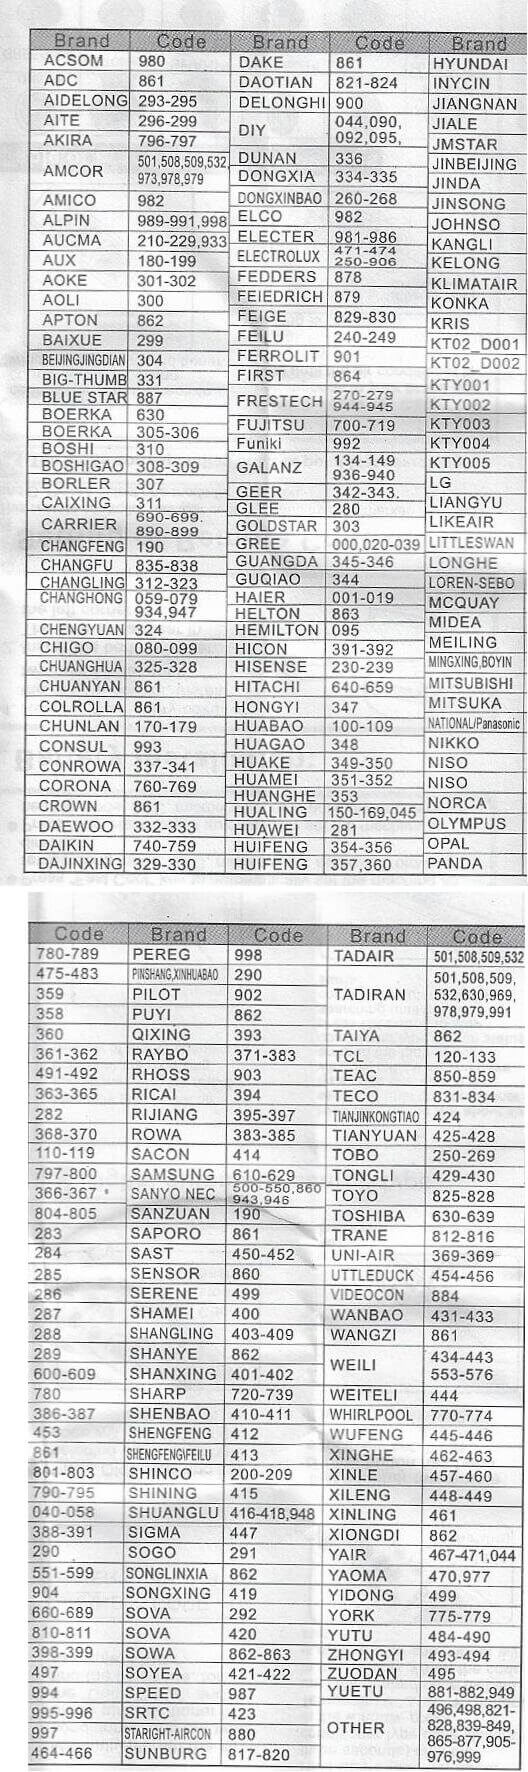 bd512 universal remote code list